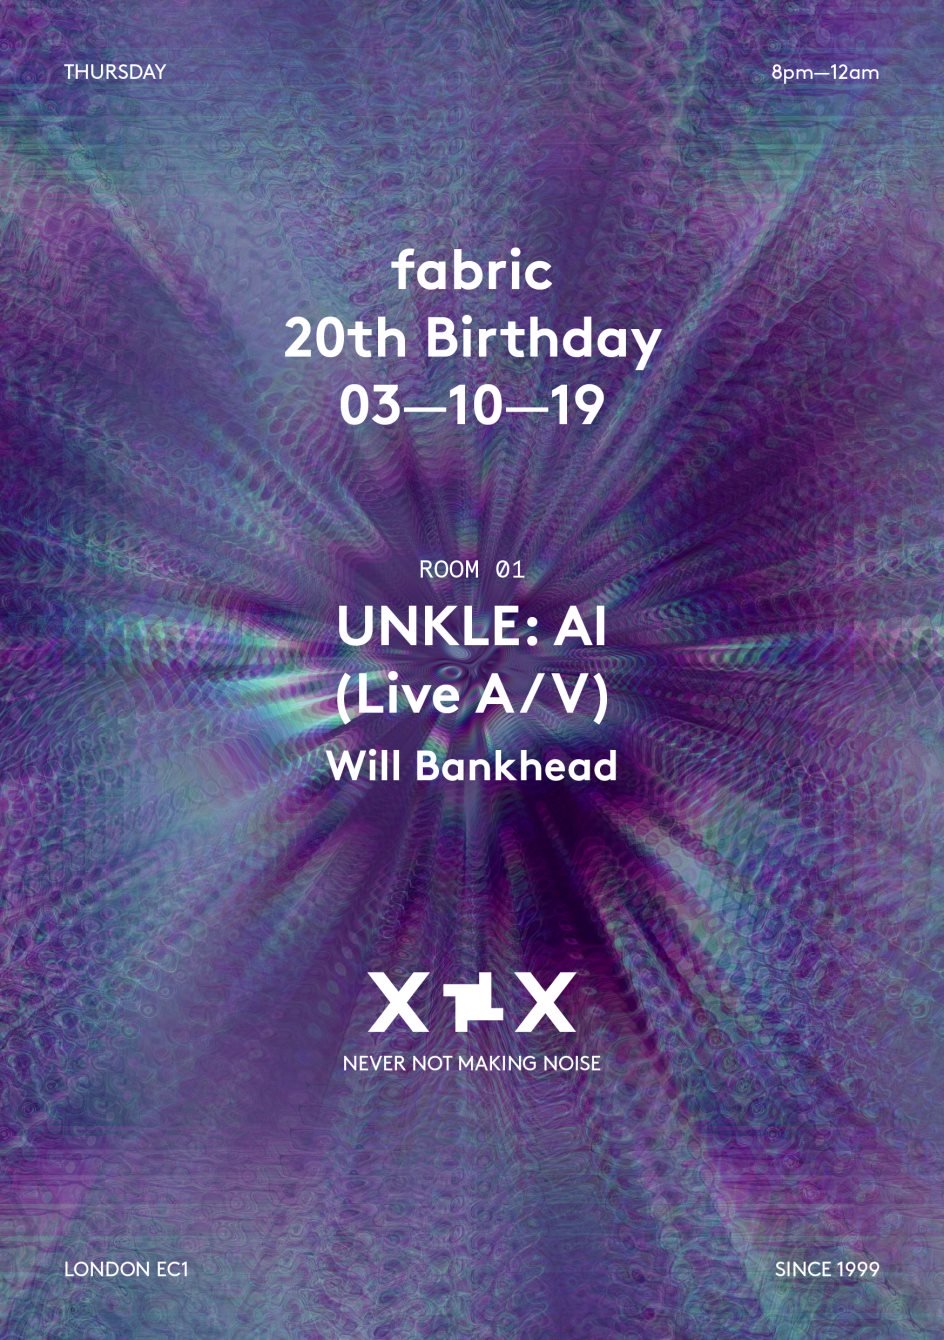 File:Fabric XX Unkle AI 3 Oct 2019.jpg